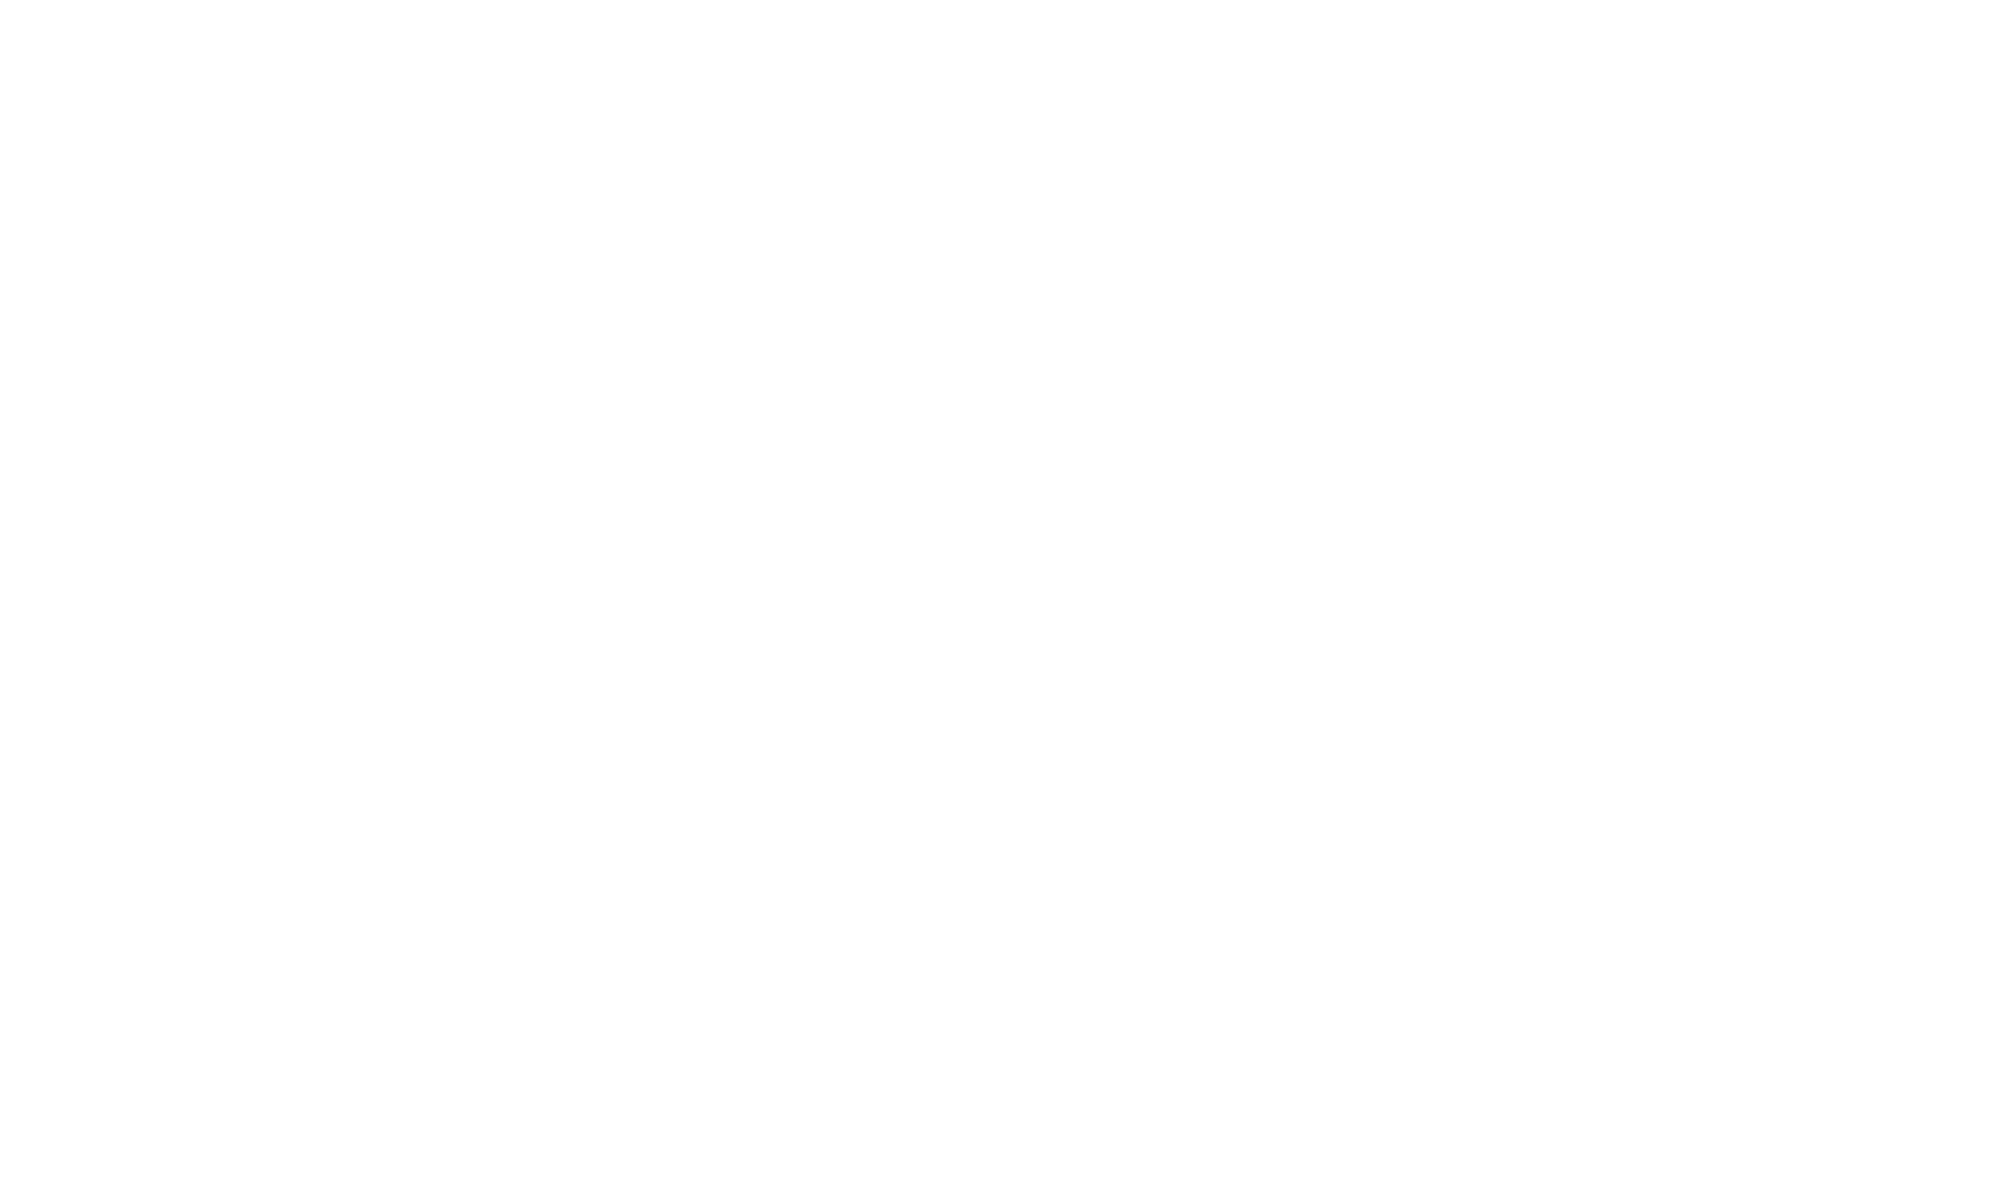 Логотип Северное сияние